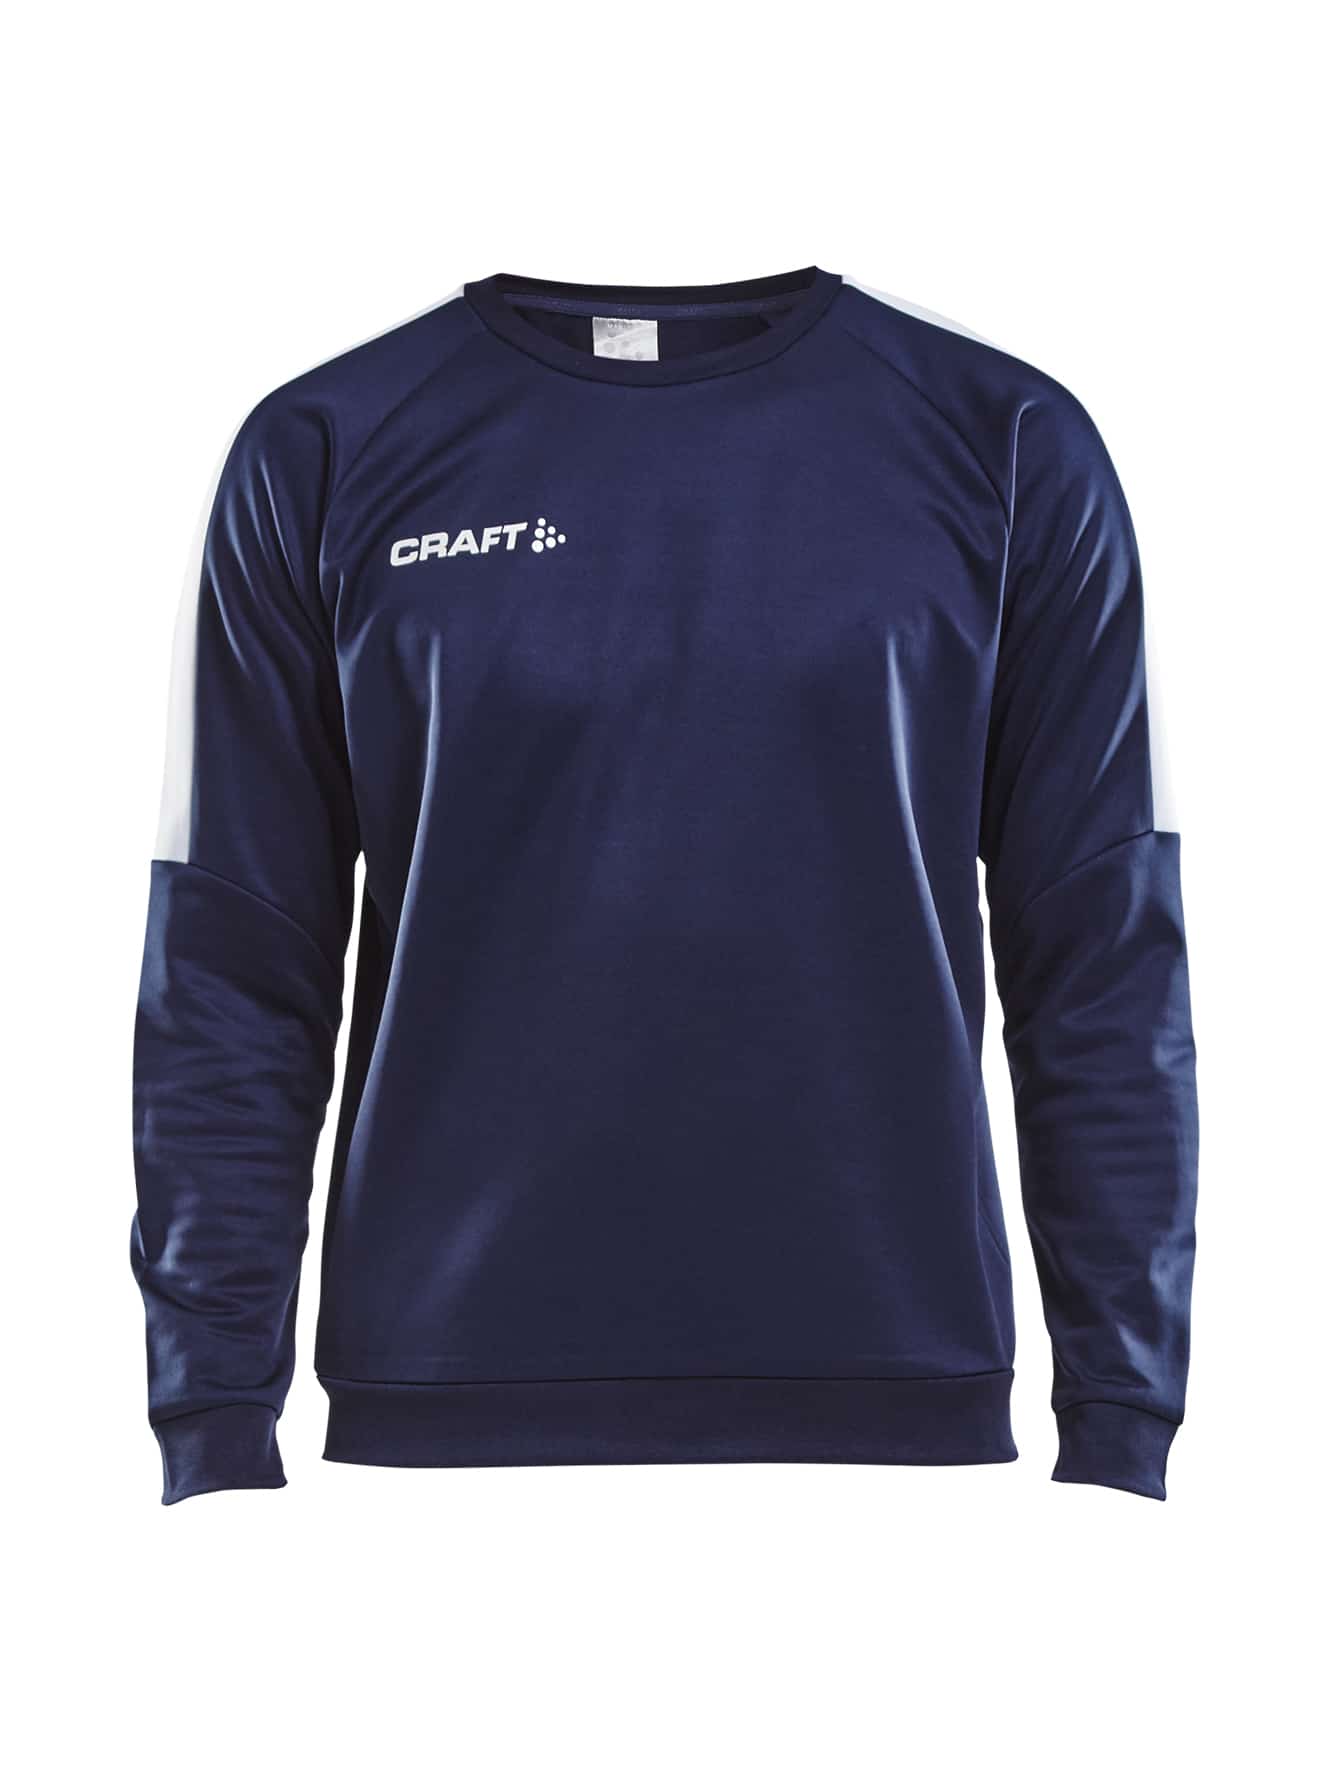 Craft - Progress R-Neck Sweater Maend - Navy/White M